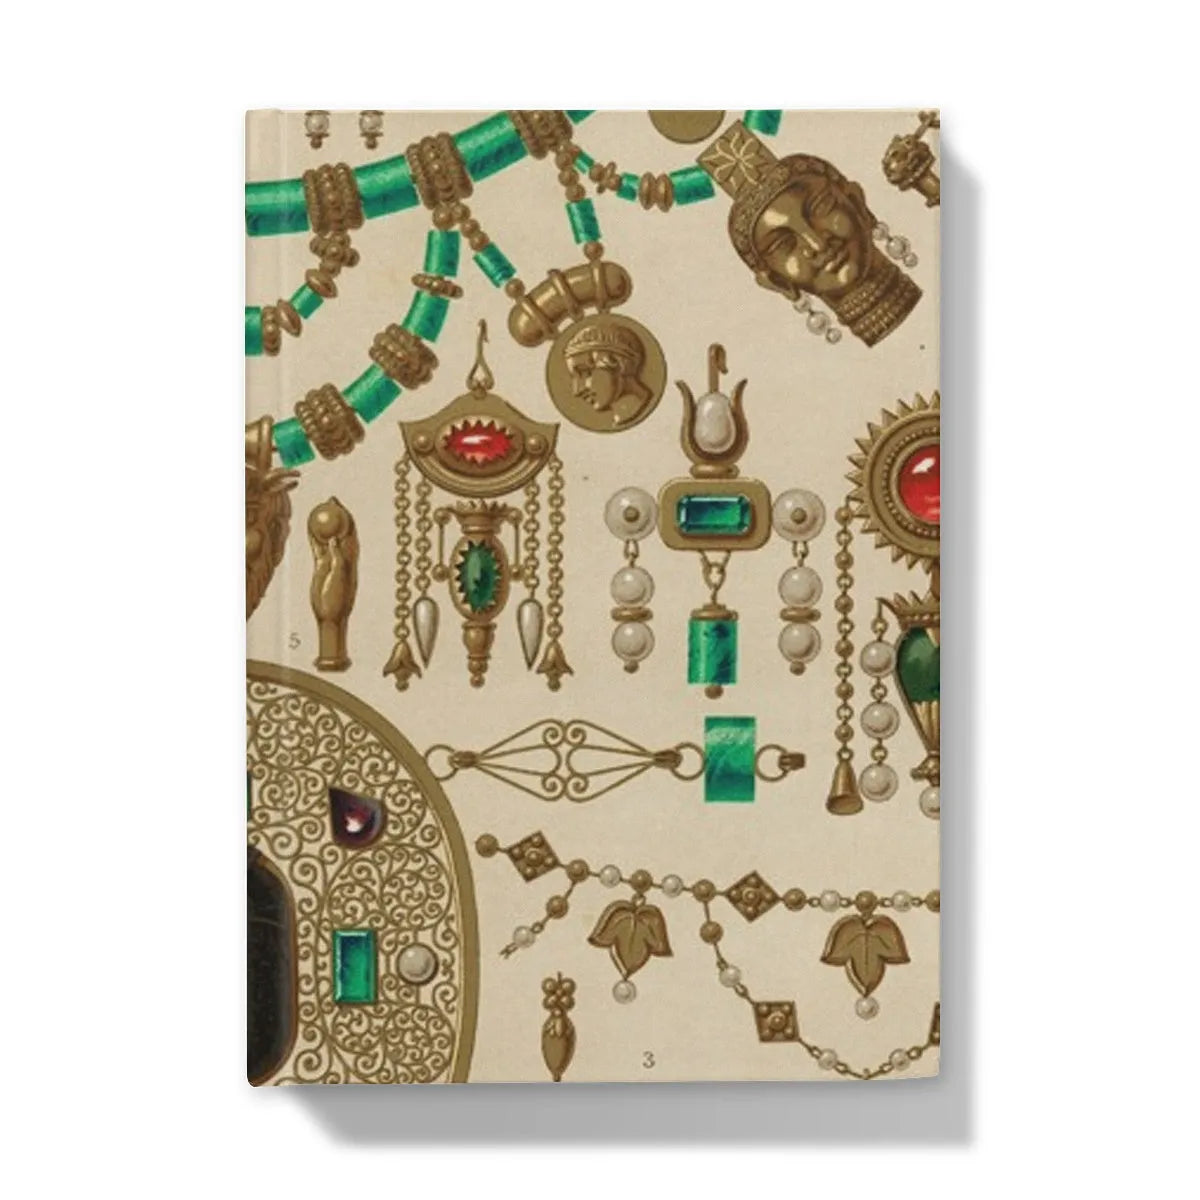 Etruscan Jewelry By Auguste Racinet Hardback Journal - 5’x7’ / Lined - Notebooks & Notepads - Aesthetic Art